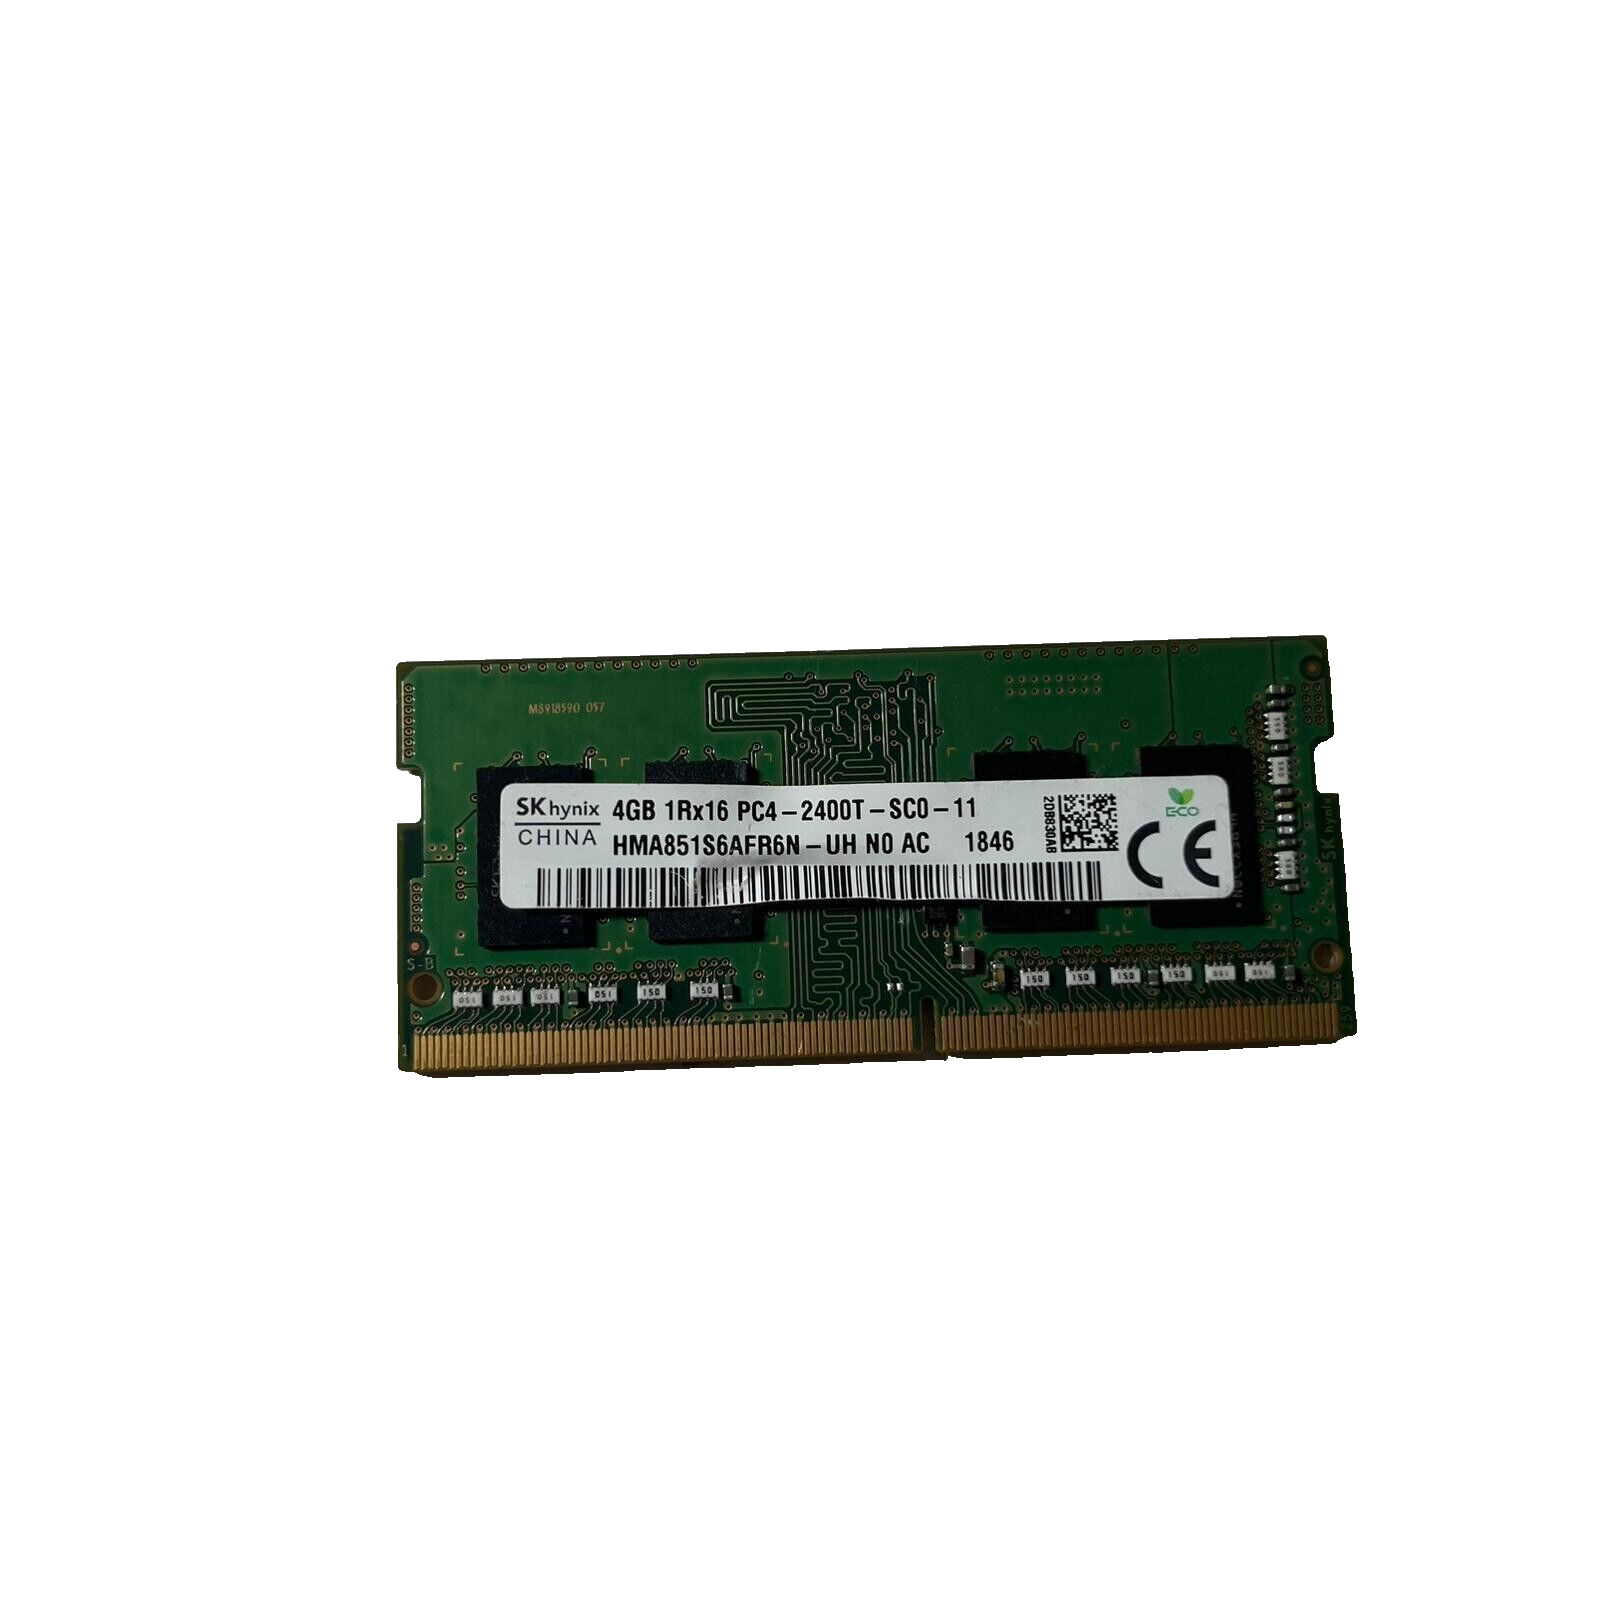 HMA851S6AFR6N-UH GENUINE HYNIX LAPTOP MEMORY 4GB PC4-2400T-SC0-11 (CA610) OEM